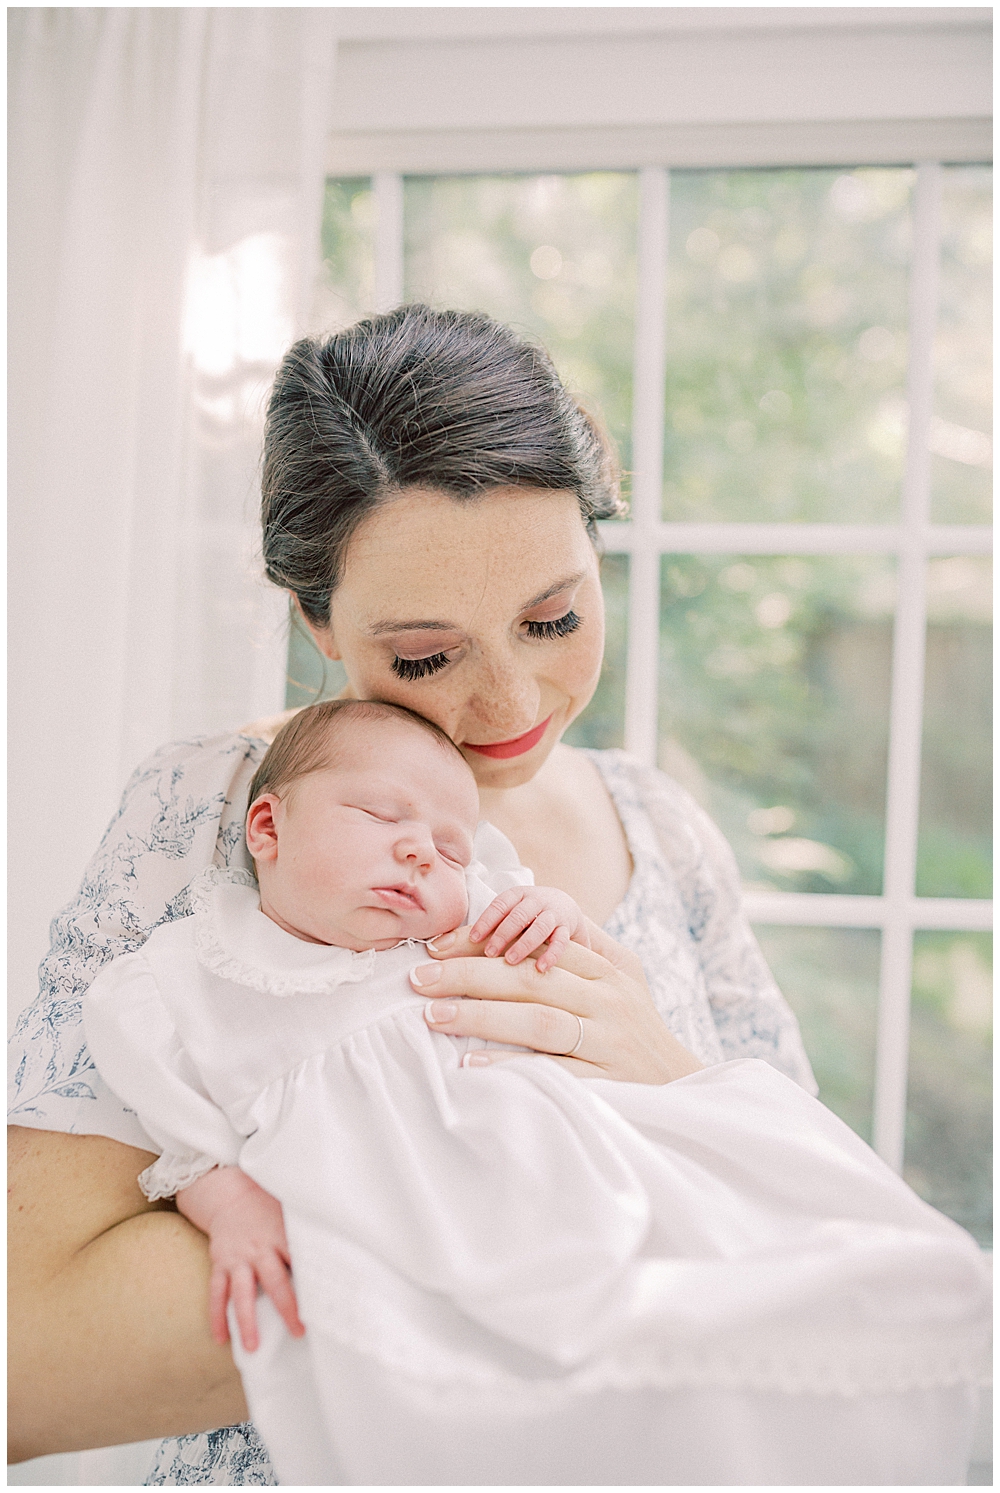 Baby girl held up to her mother's cheek during her studio outdoor newborn session